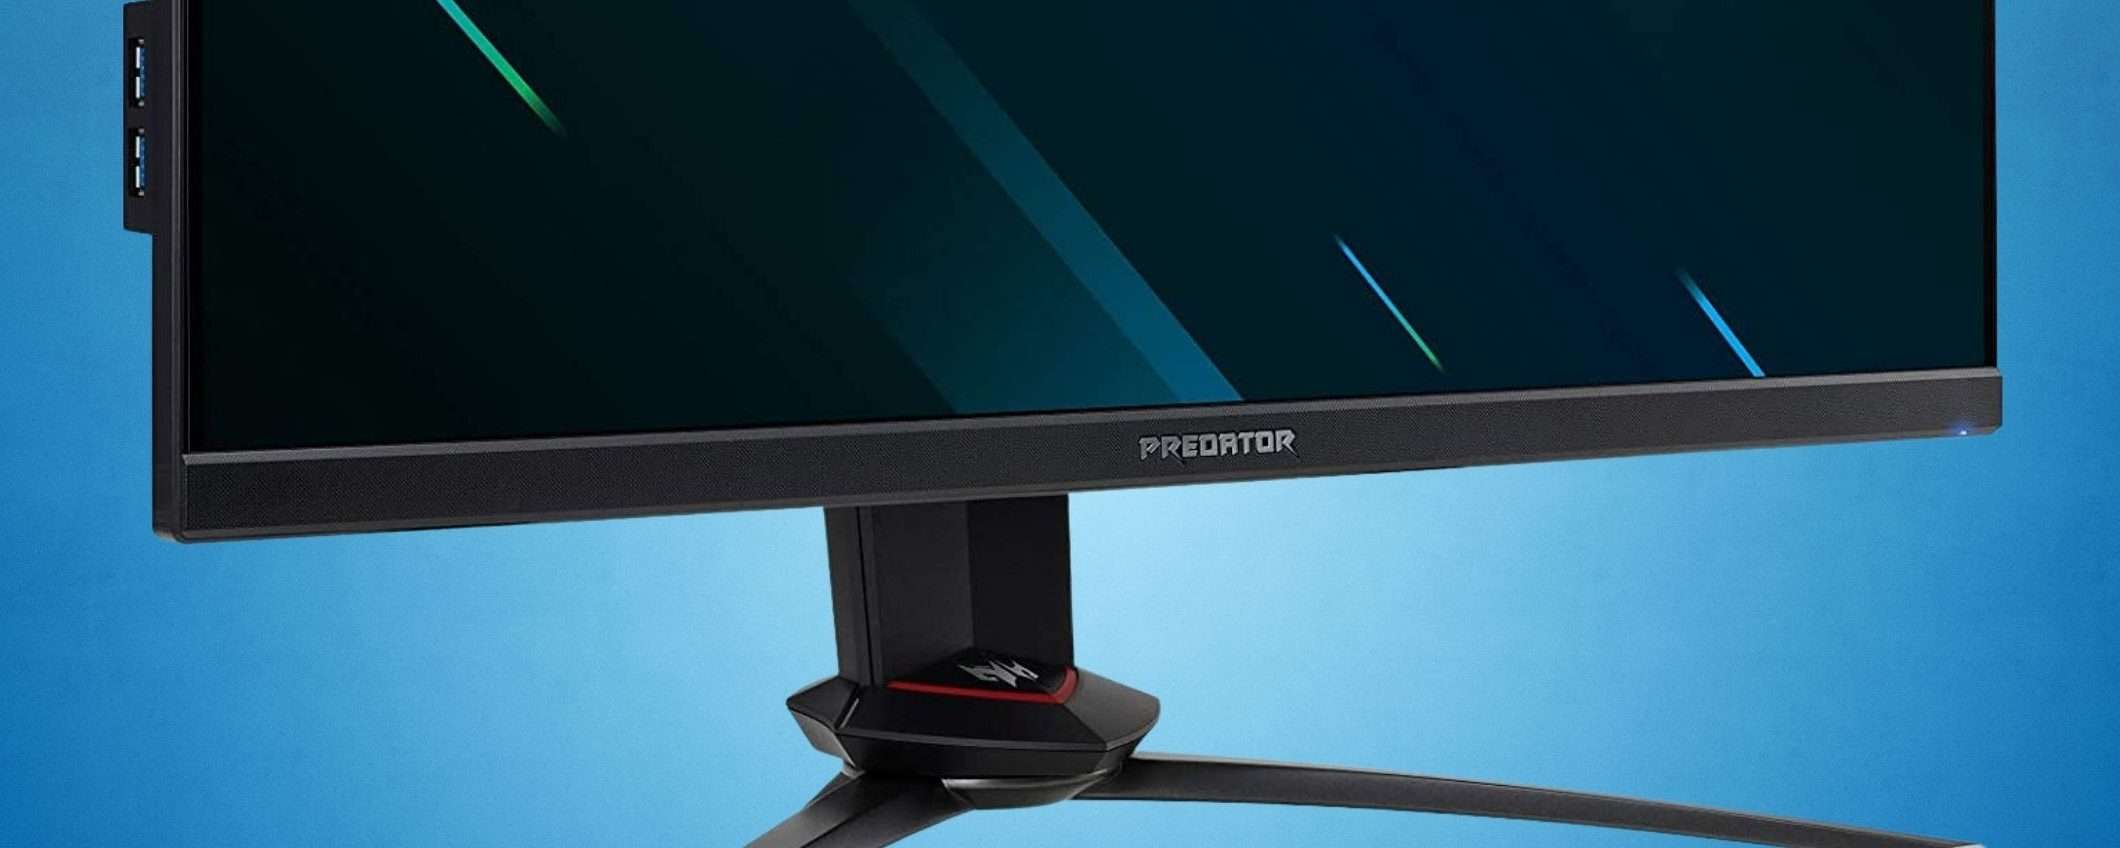 Acer Predator: un ottimo monitor da gaming da 240 Hz a meno di 300 euro